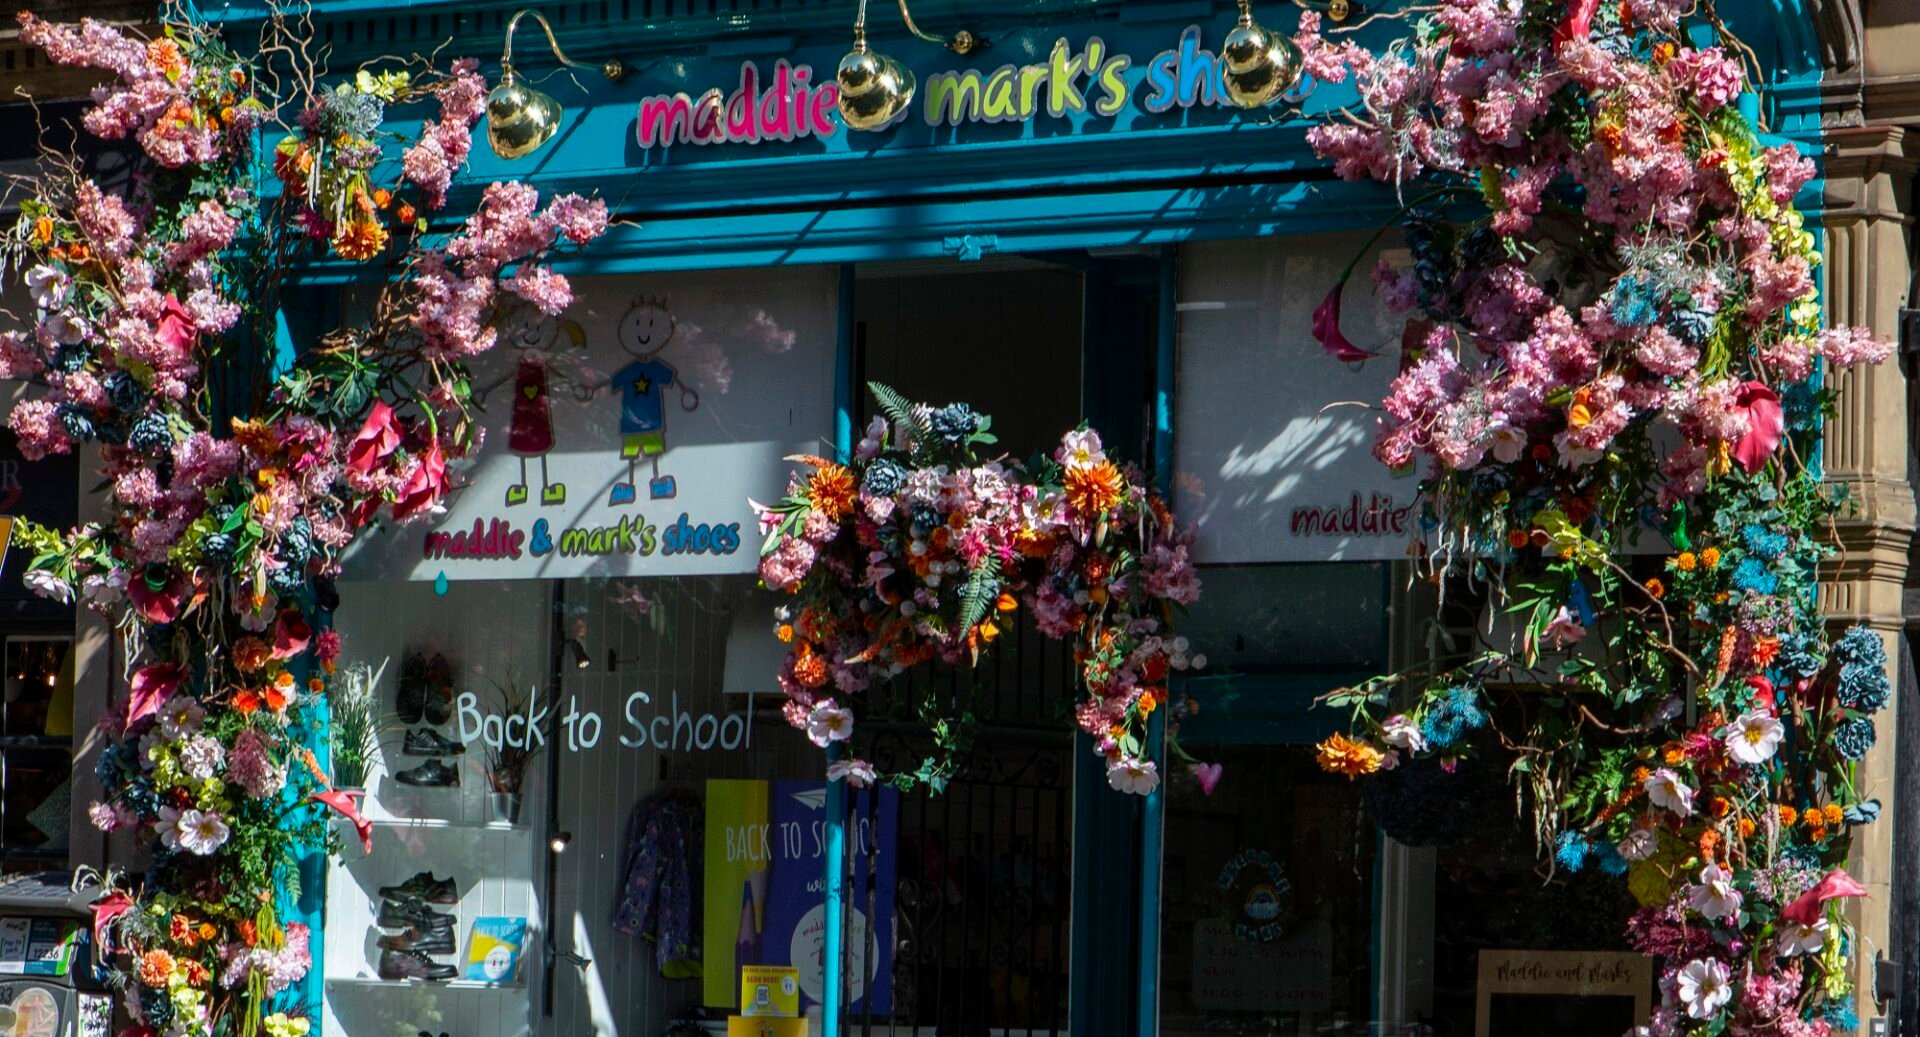 Maddie Marks shop Bruntfield flowers on facade